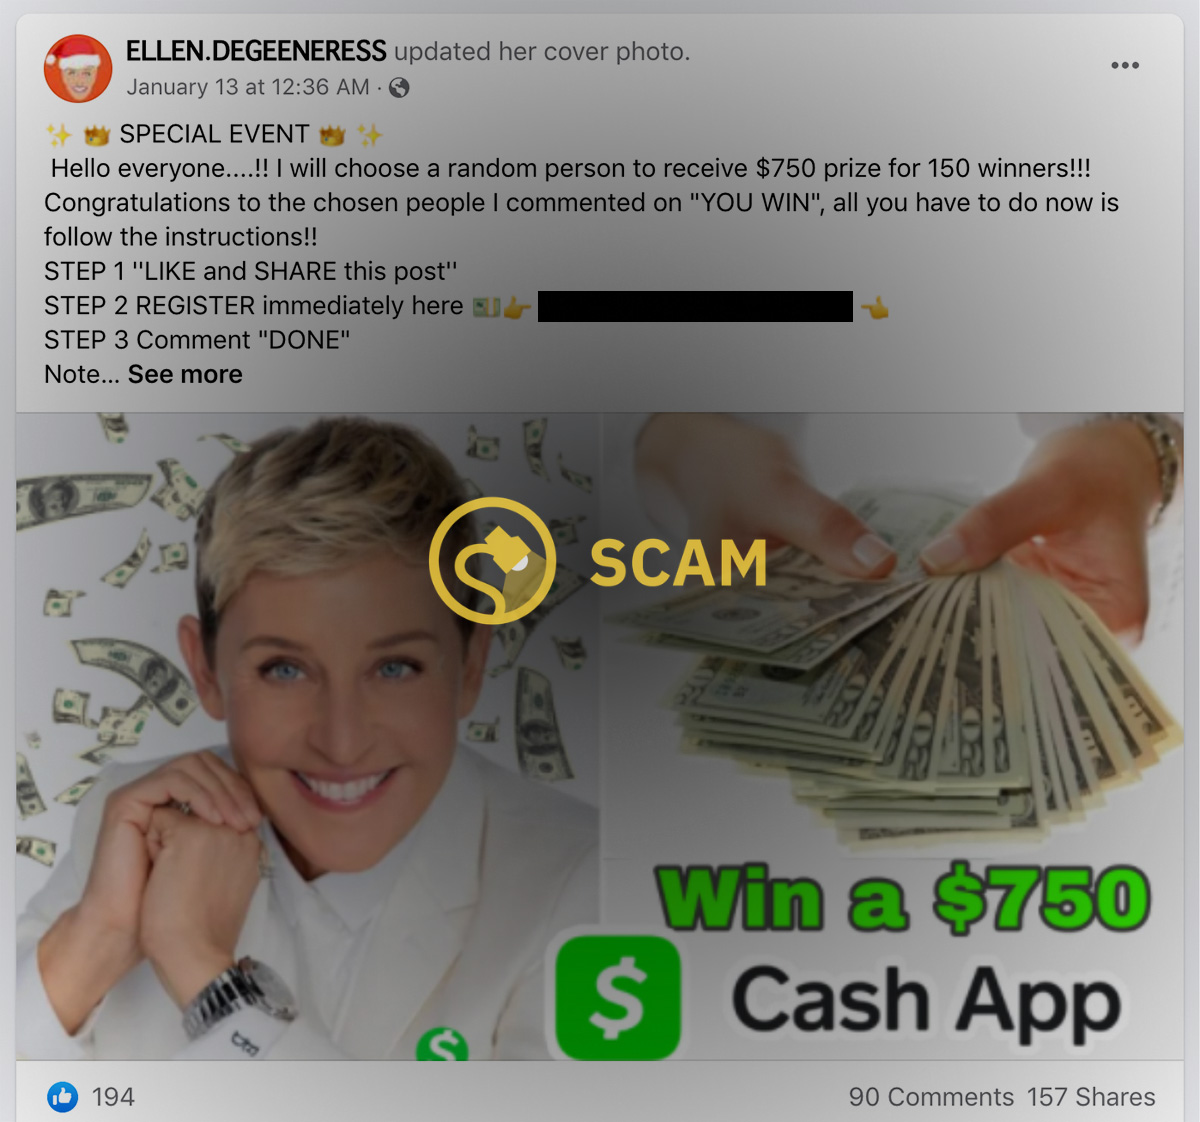 A Facebook scam showed pictures of Ellen DeGeneres and promised $750 or $1,000 Cash App prizes.